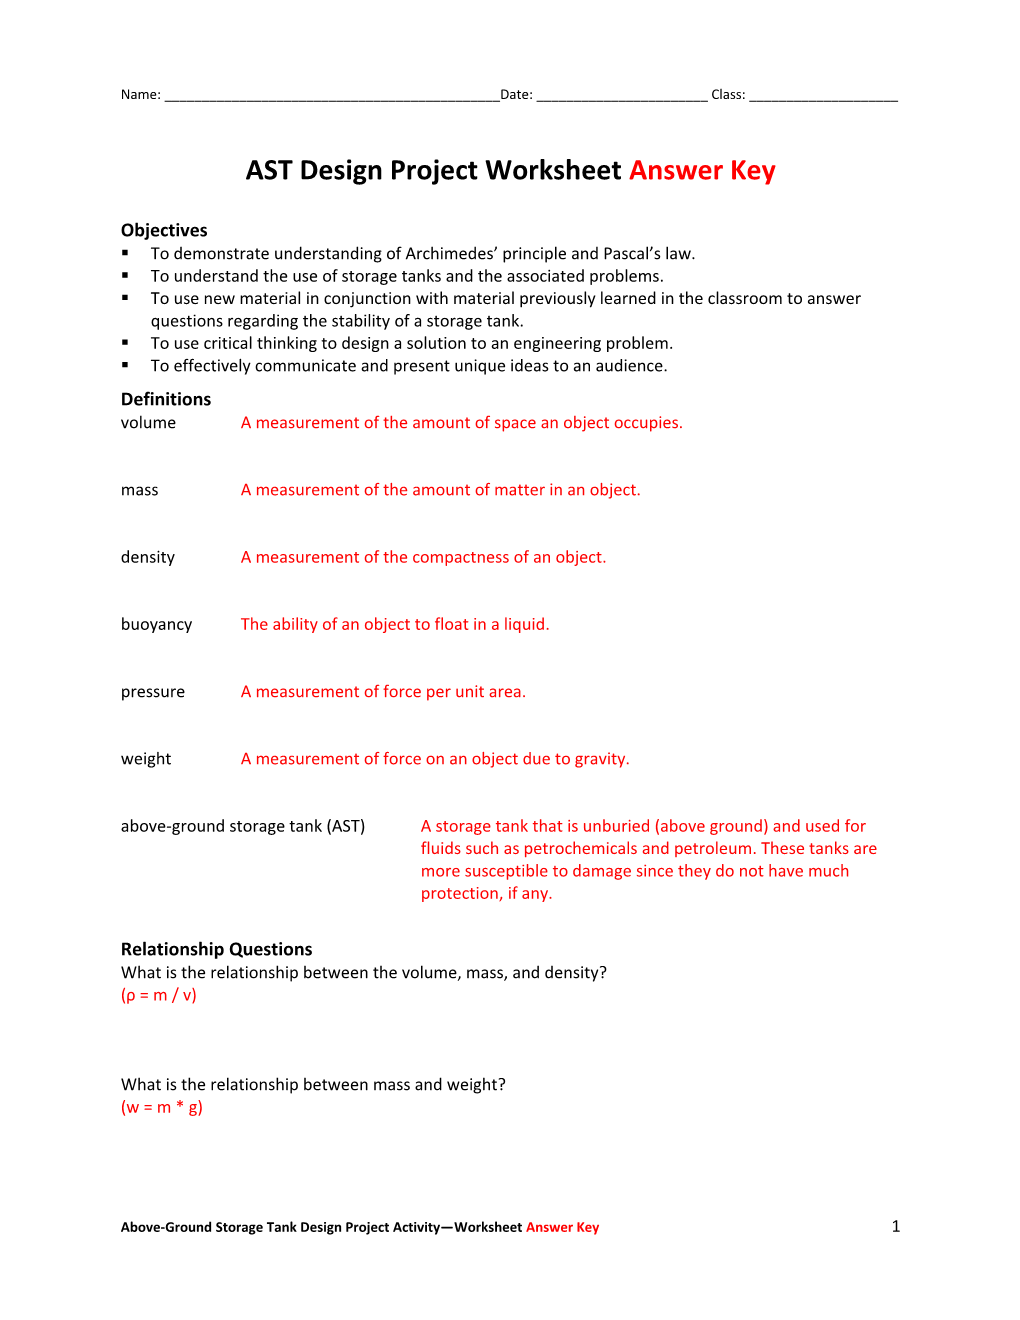 AST Design Project Worksheetanswer Key